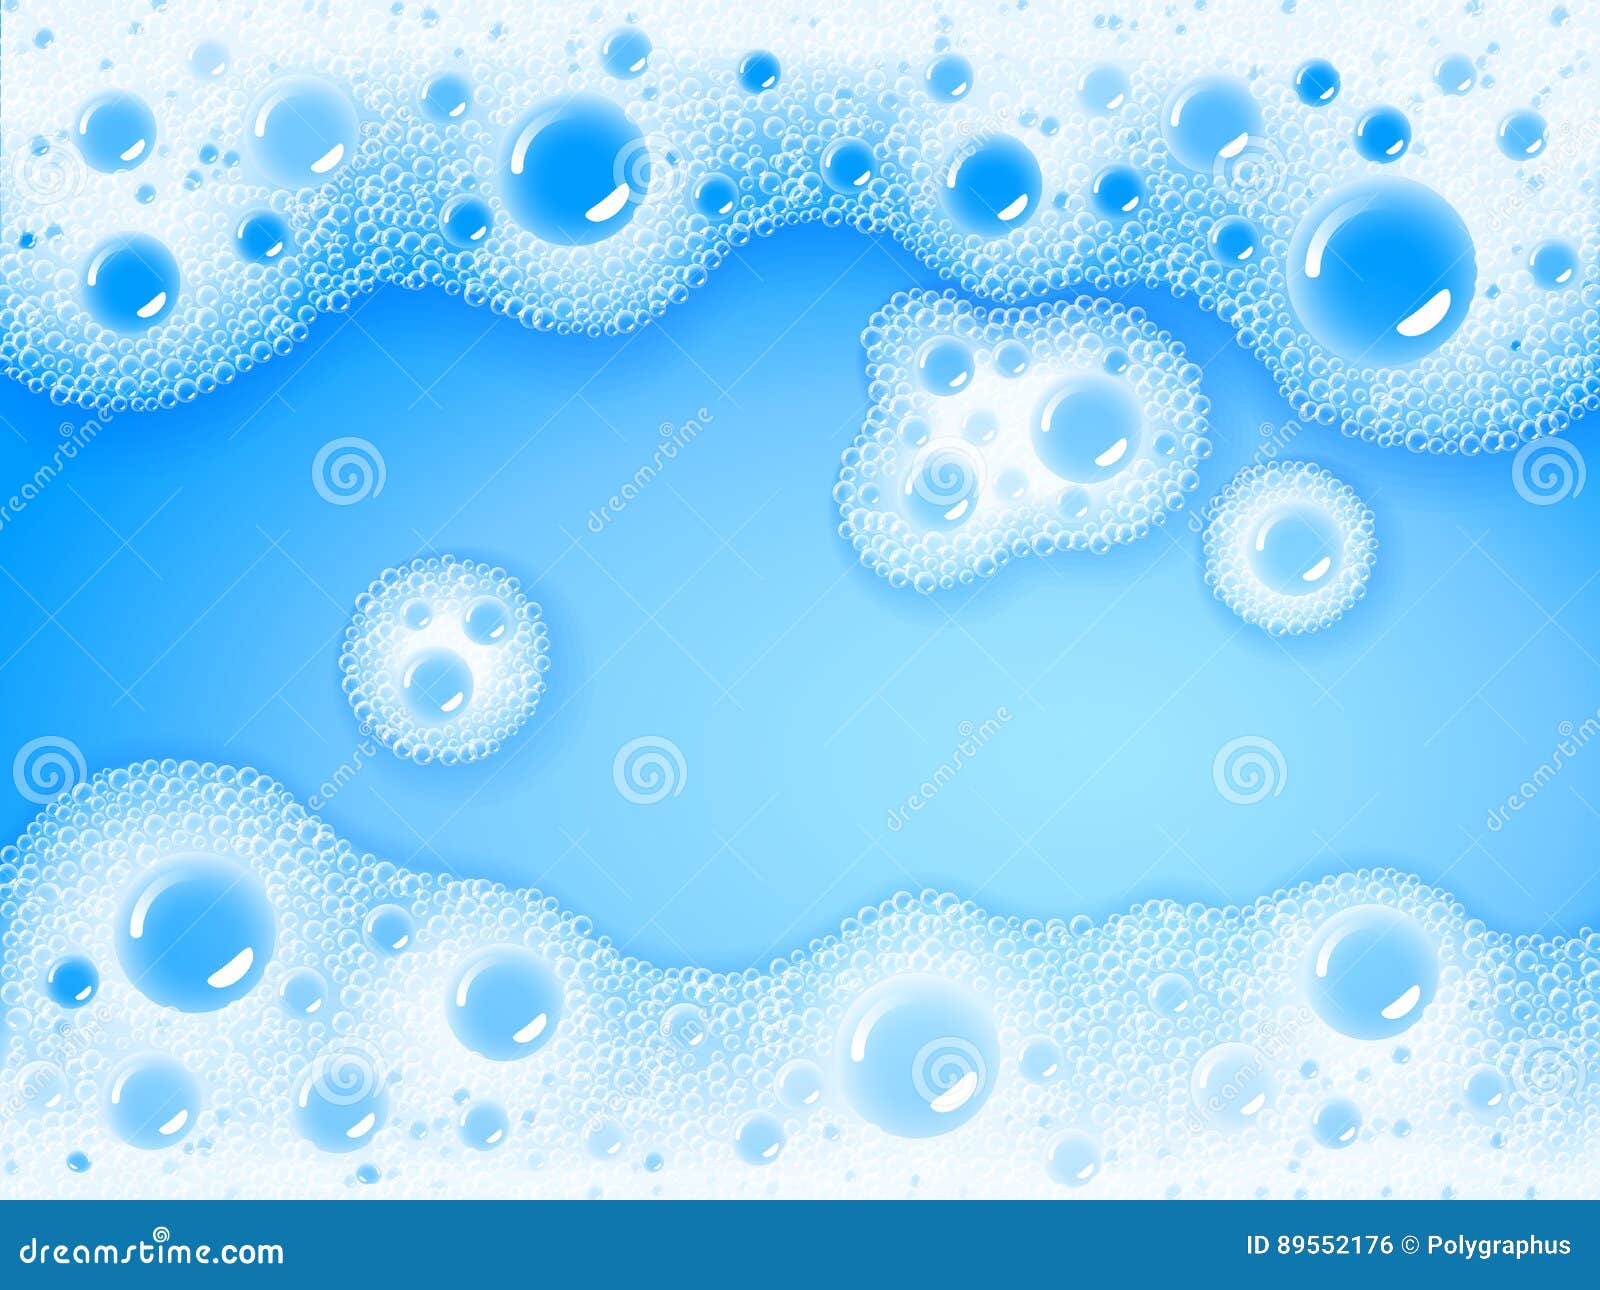 soap sud.  transparent foam on blue water background